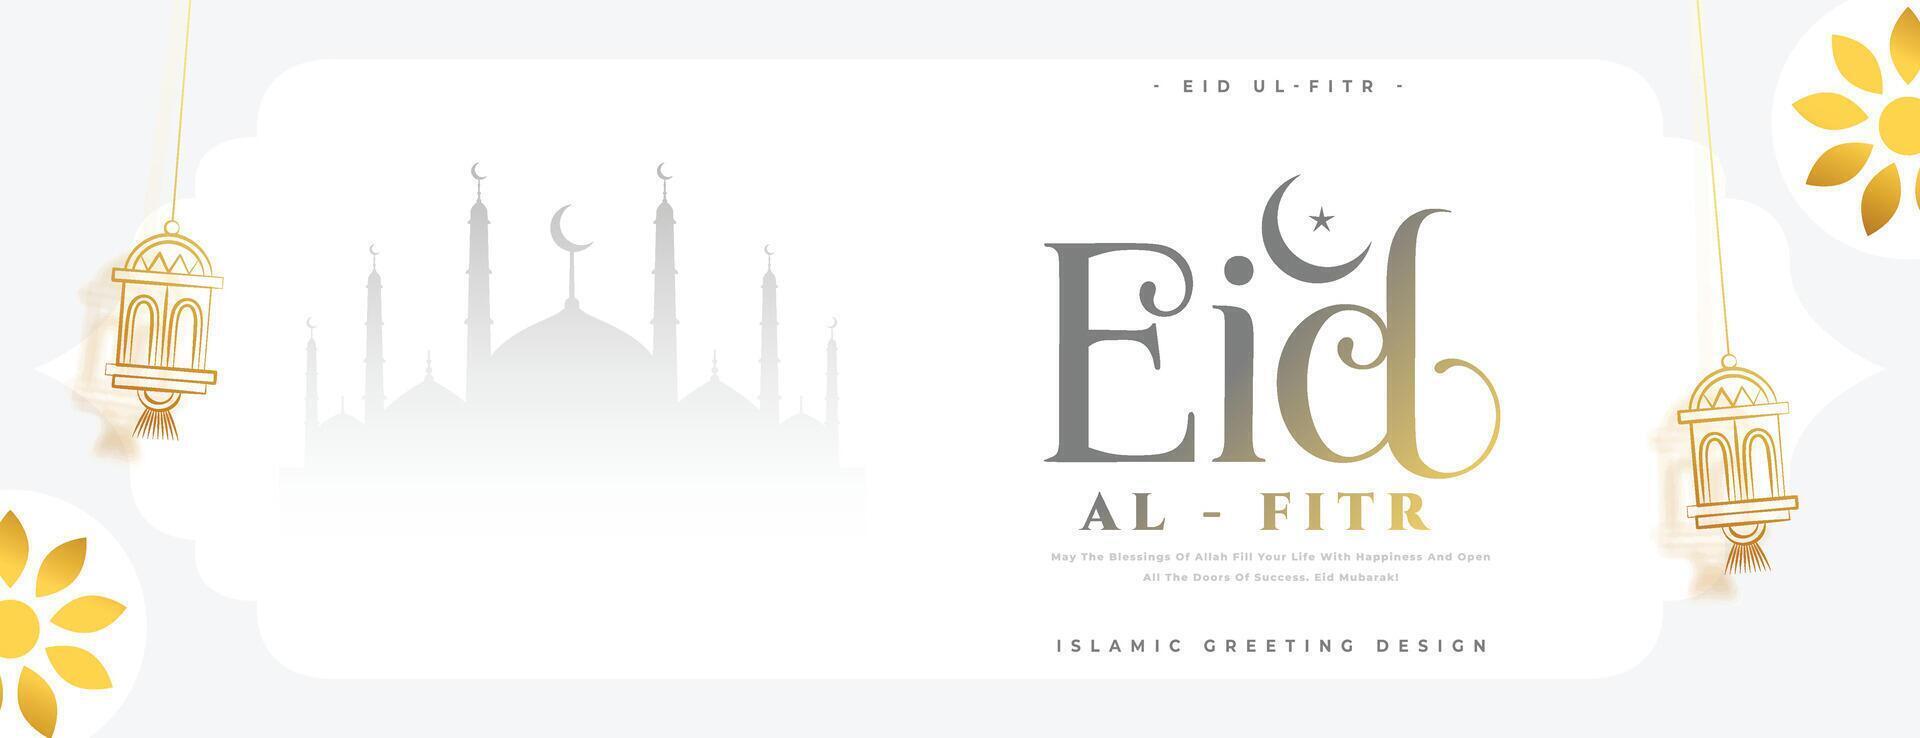 beautiful eid al fitr celebration banner with islamic decor vector